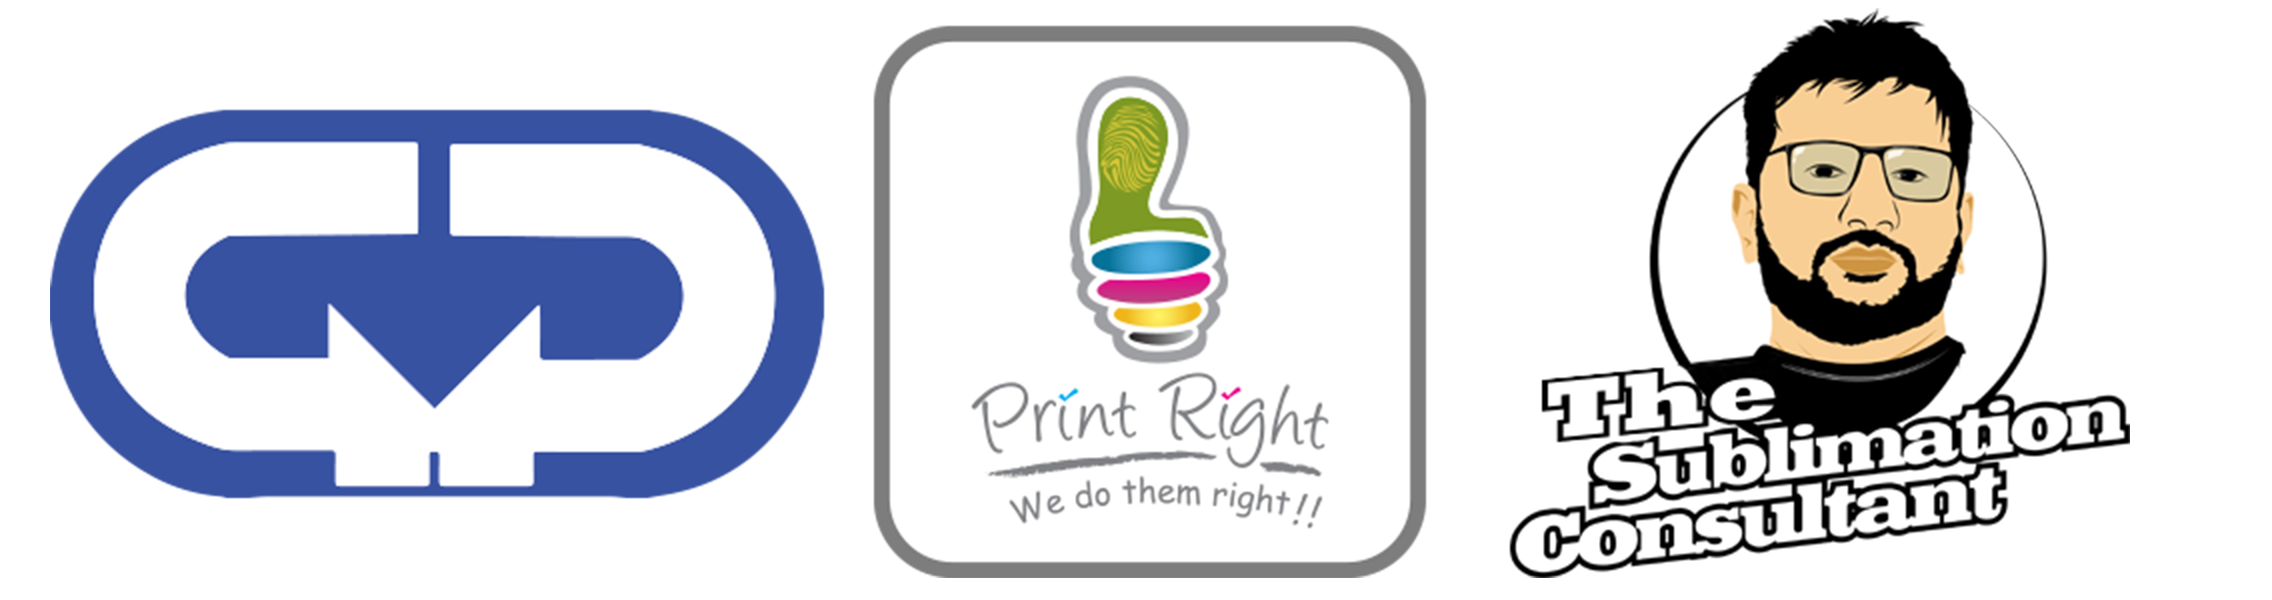 Print Right - 